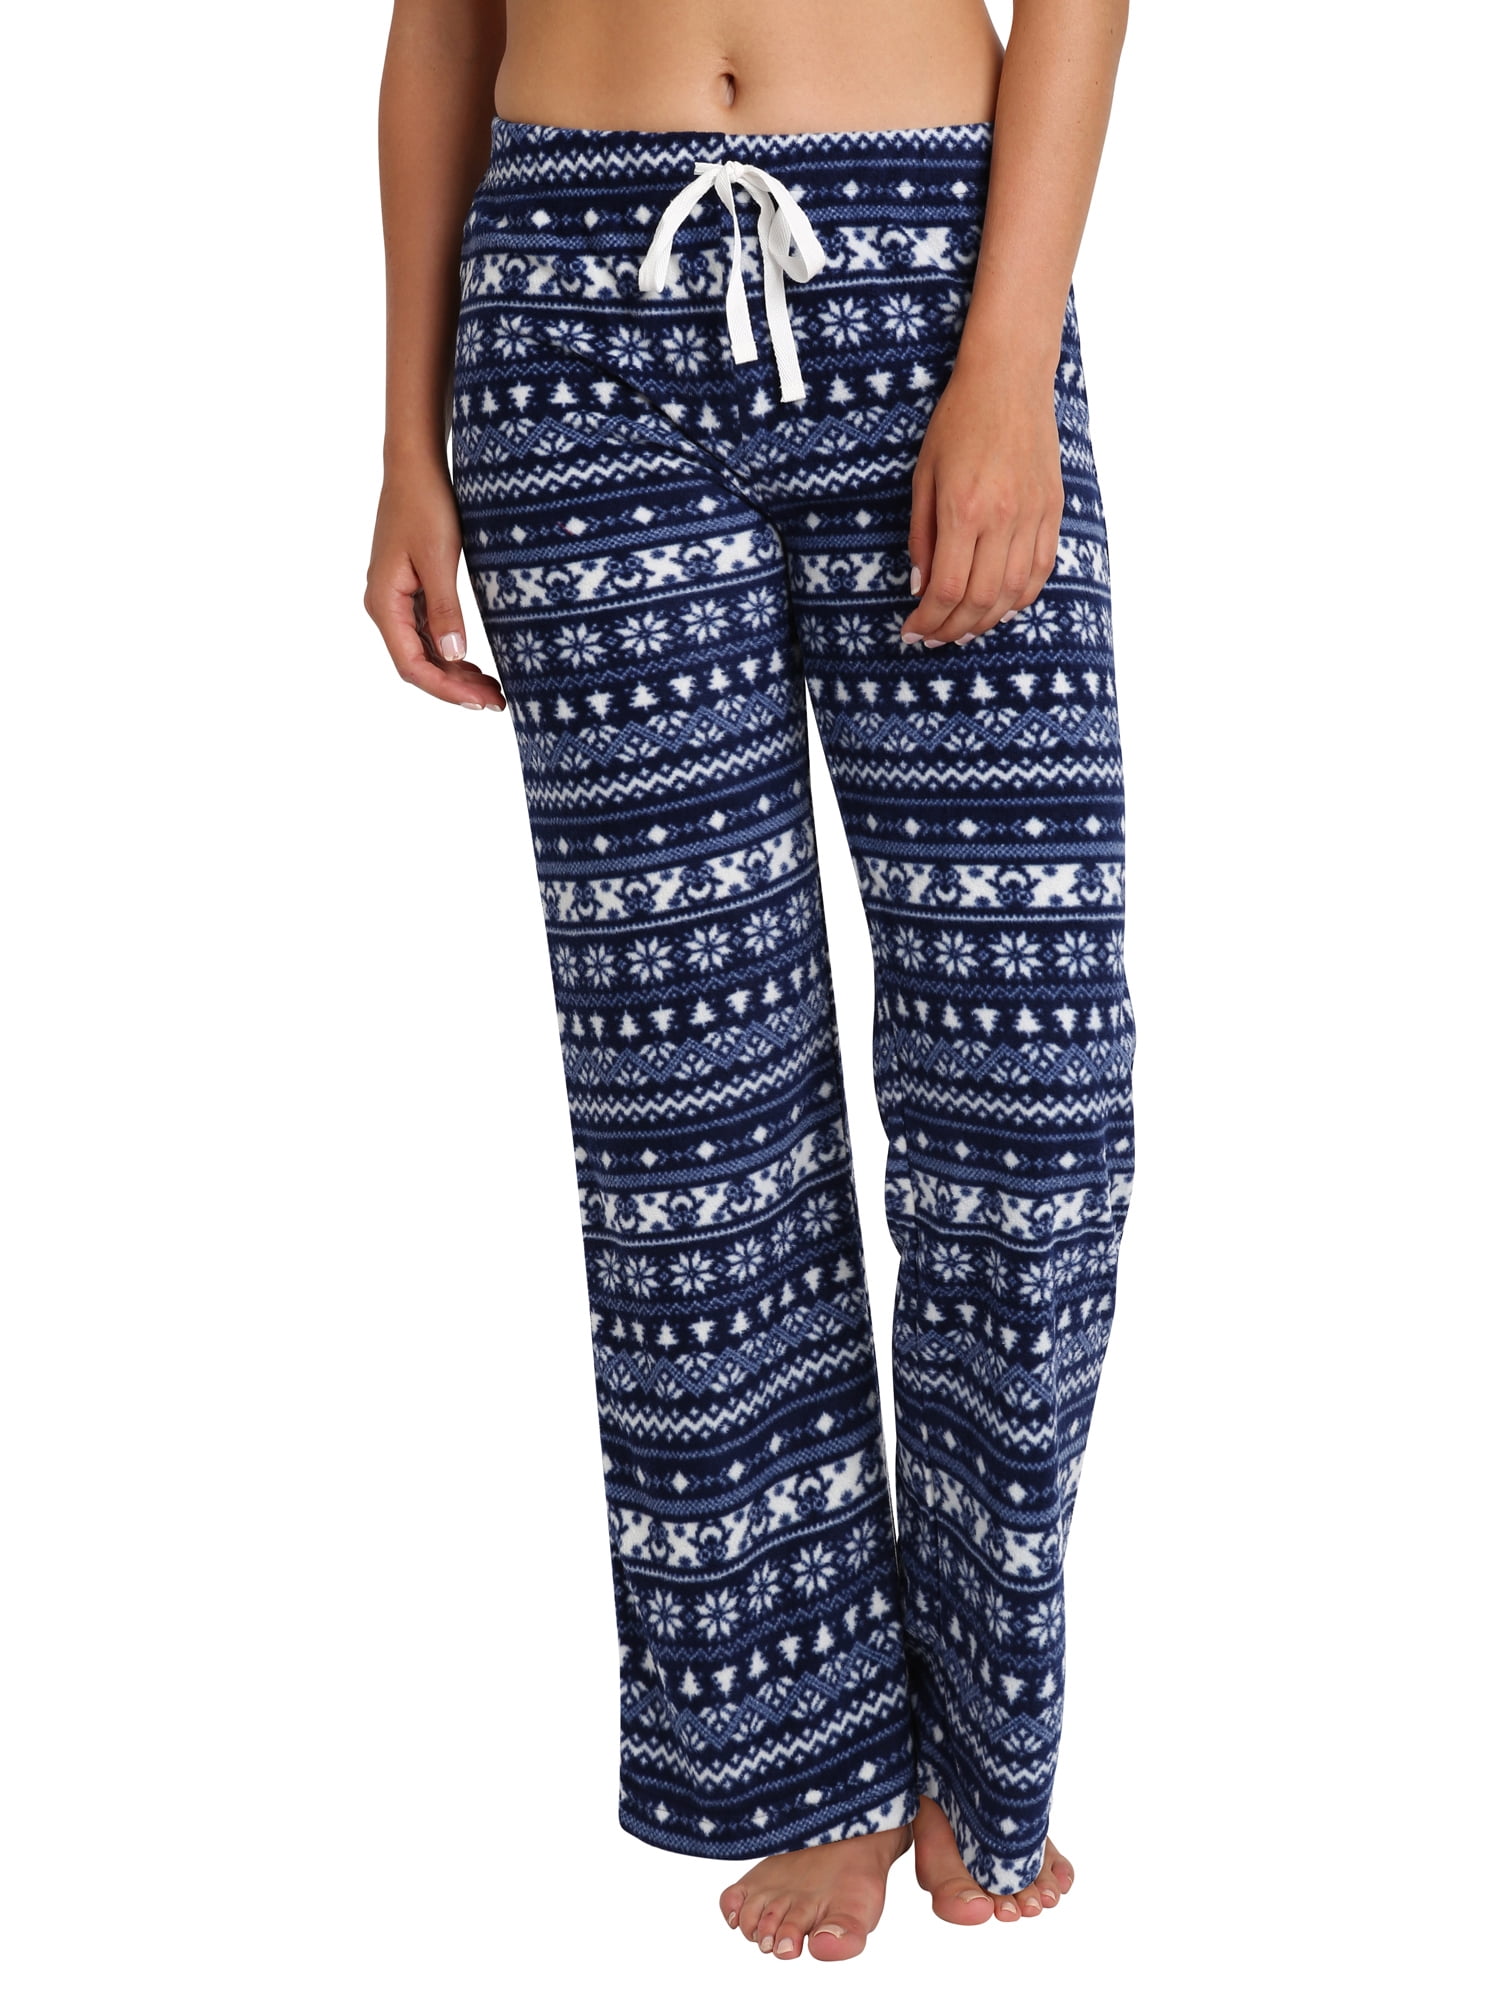 Details about   Women's Casual Sleep Pants Sleepwear Lounge Pajama Gym Yoga Bottom with Pocket 